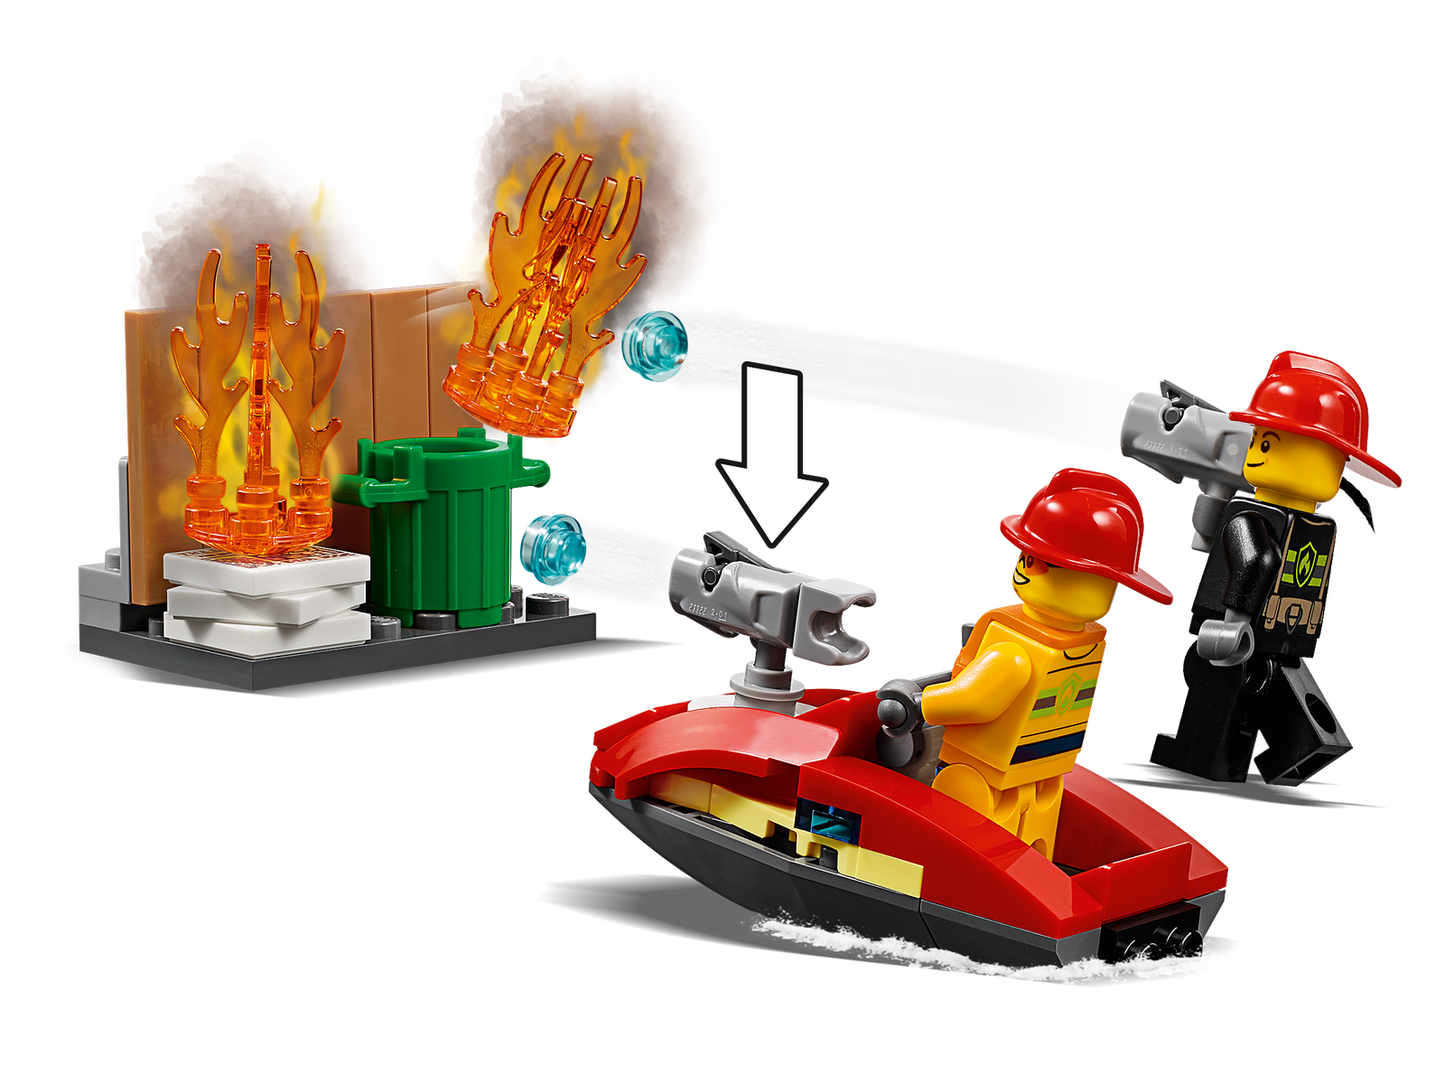 Lego City Fire Station 60215